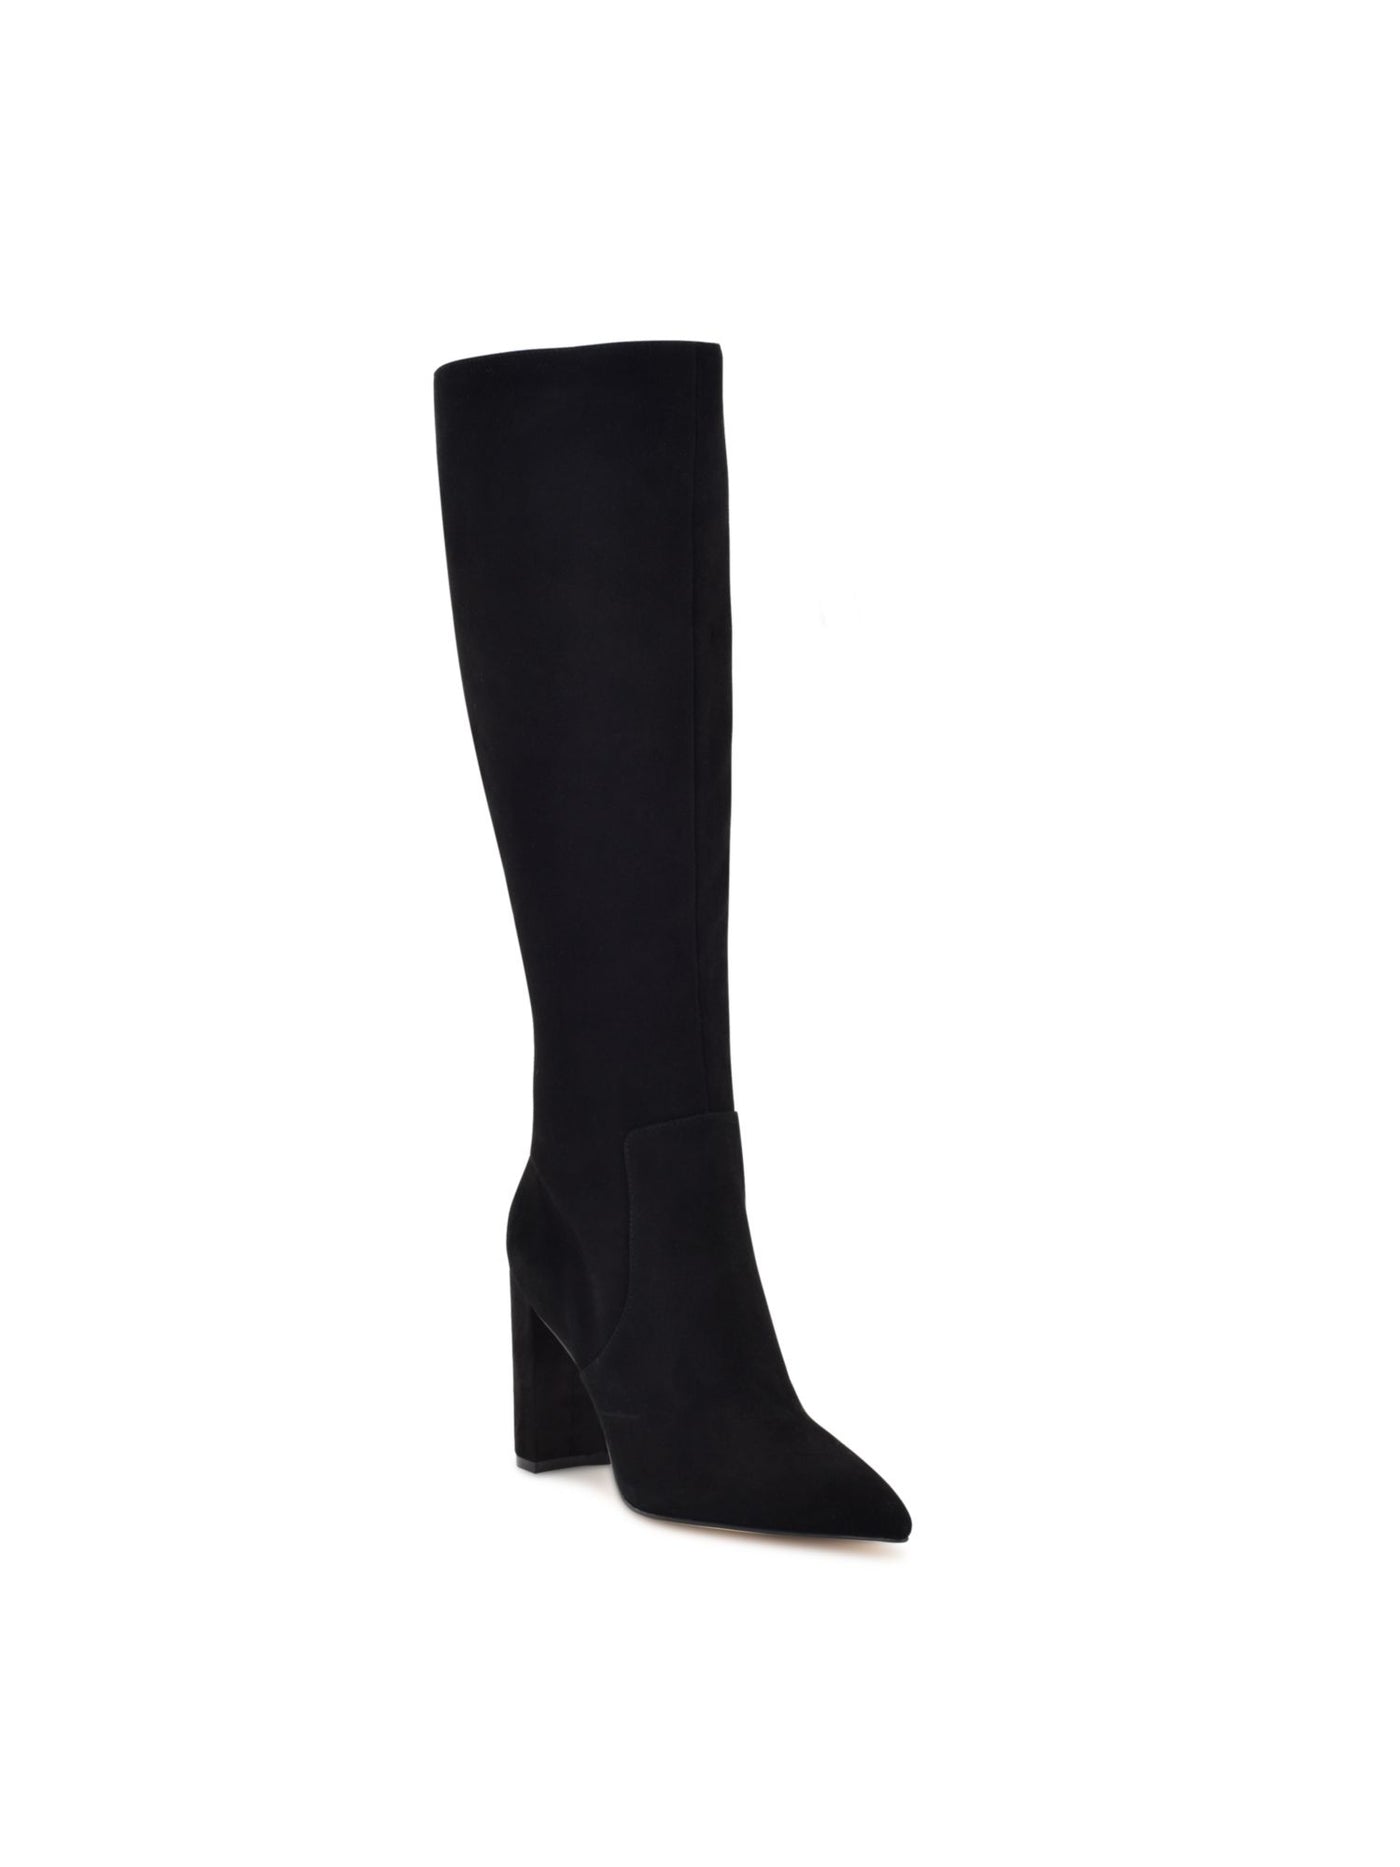 NINE WEST Womens Black Comfort Danee Pointy Toe Block Heel Zip-Up Leather Boots Shoes 9 M